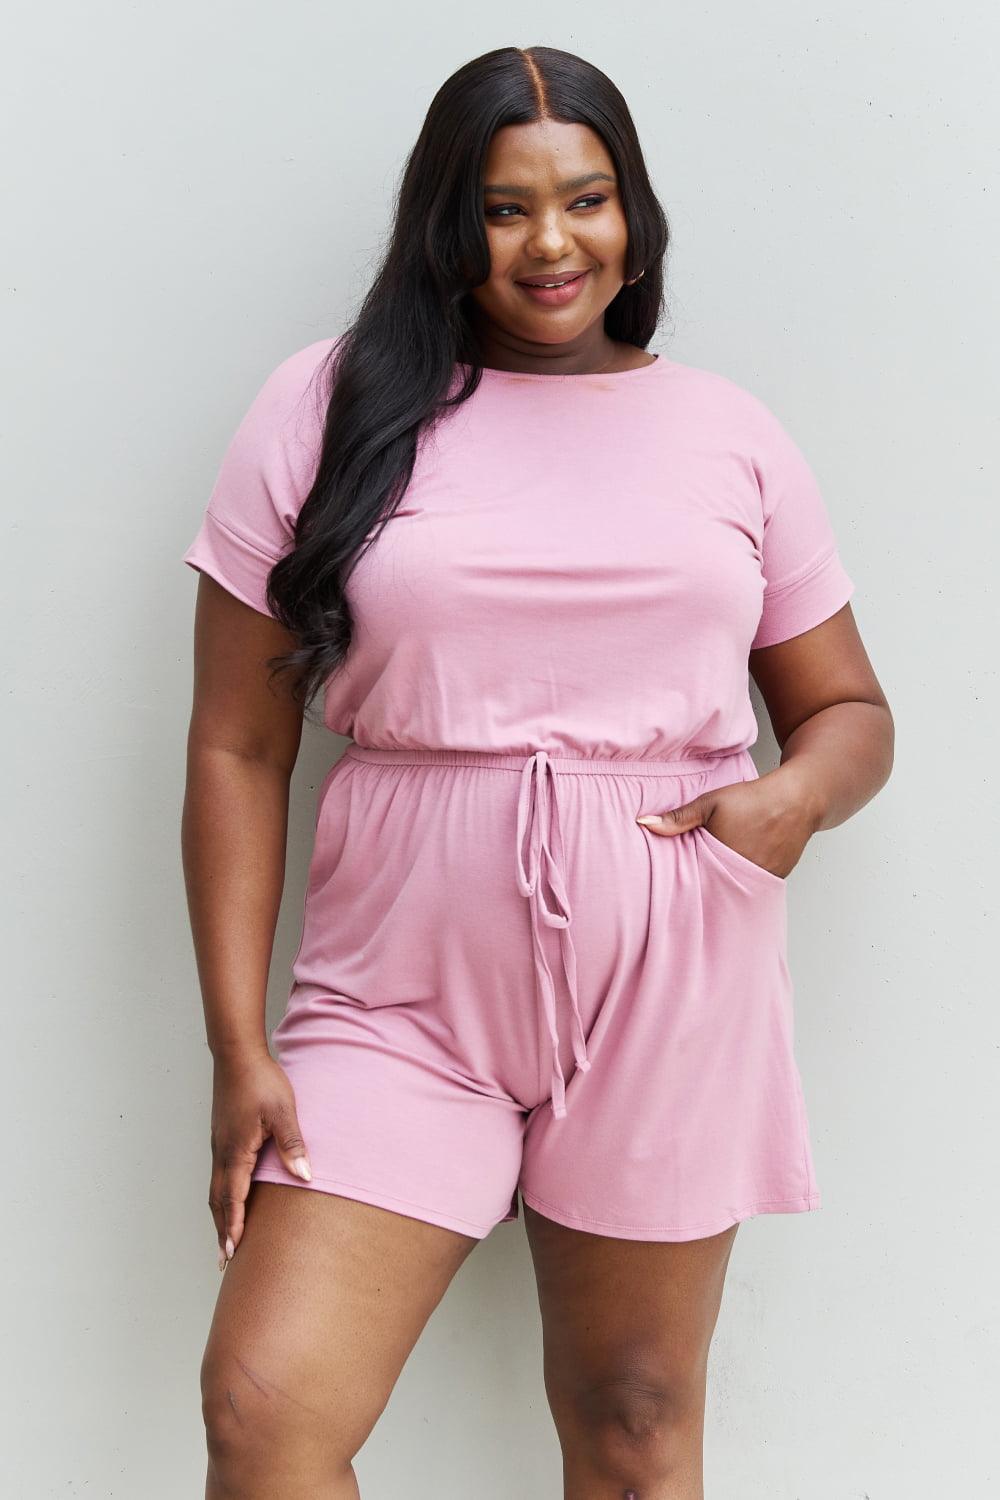 Bona Fide Fashion - Chilled Out Full Size Short Sleeve Romper in Light Carnation Pink - Women Fashion - Bona Fide Fashion